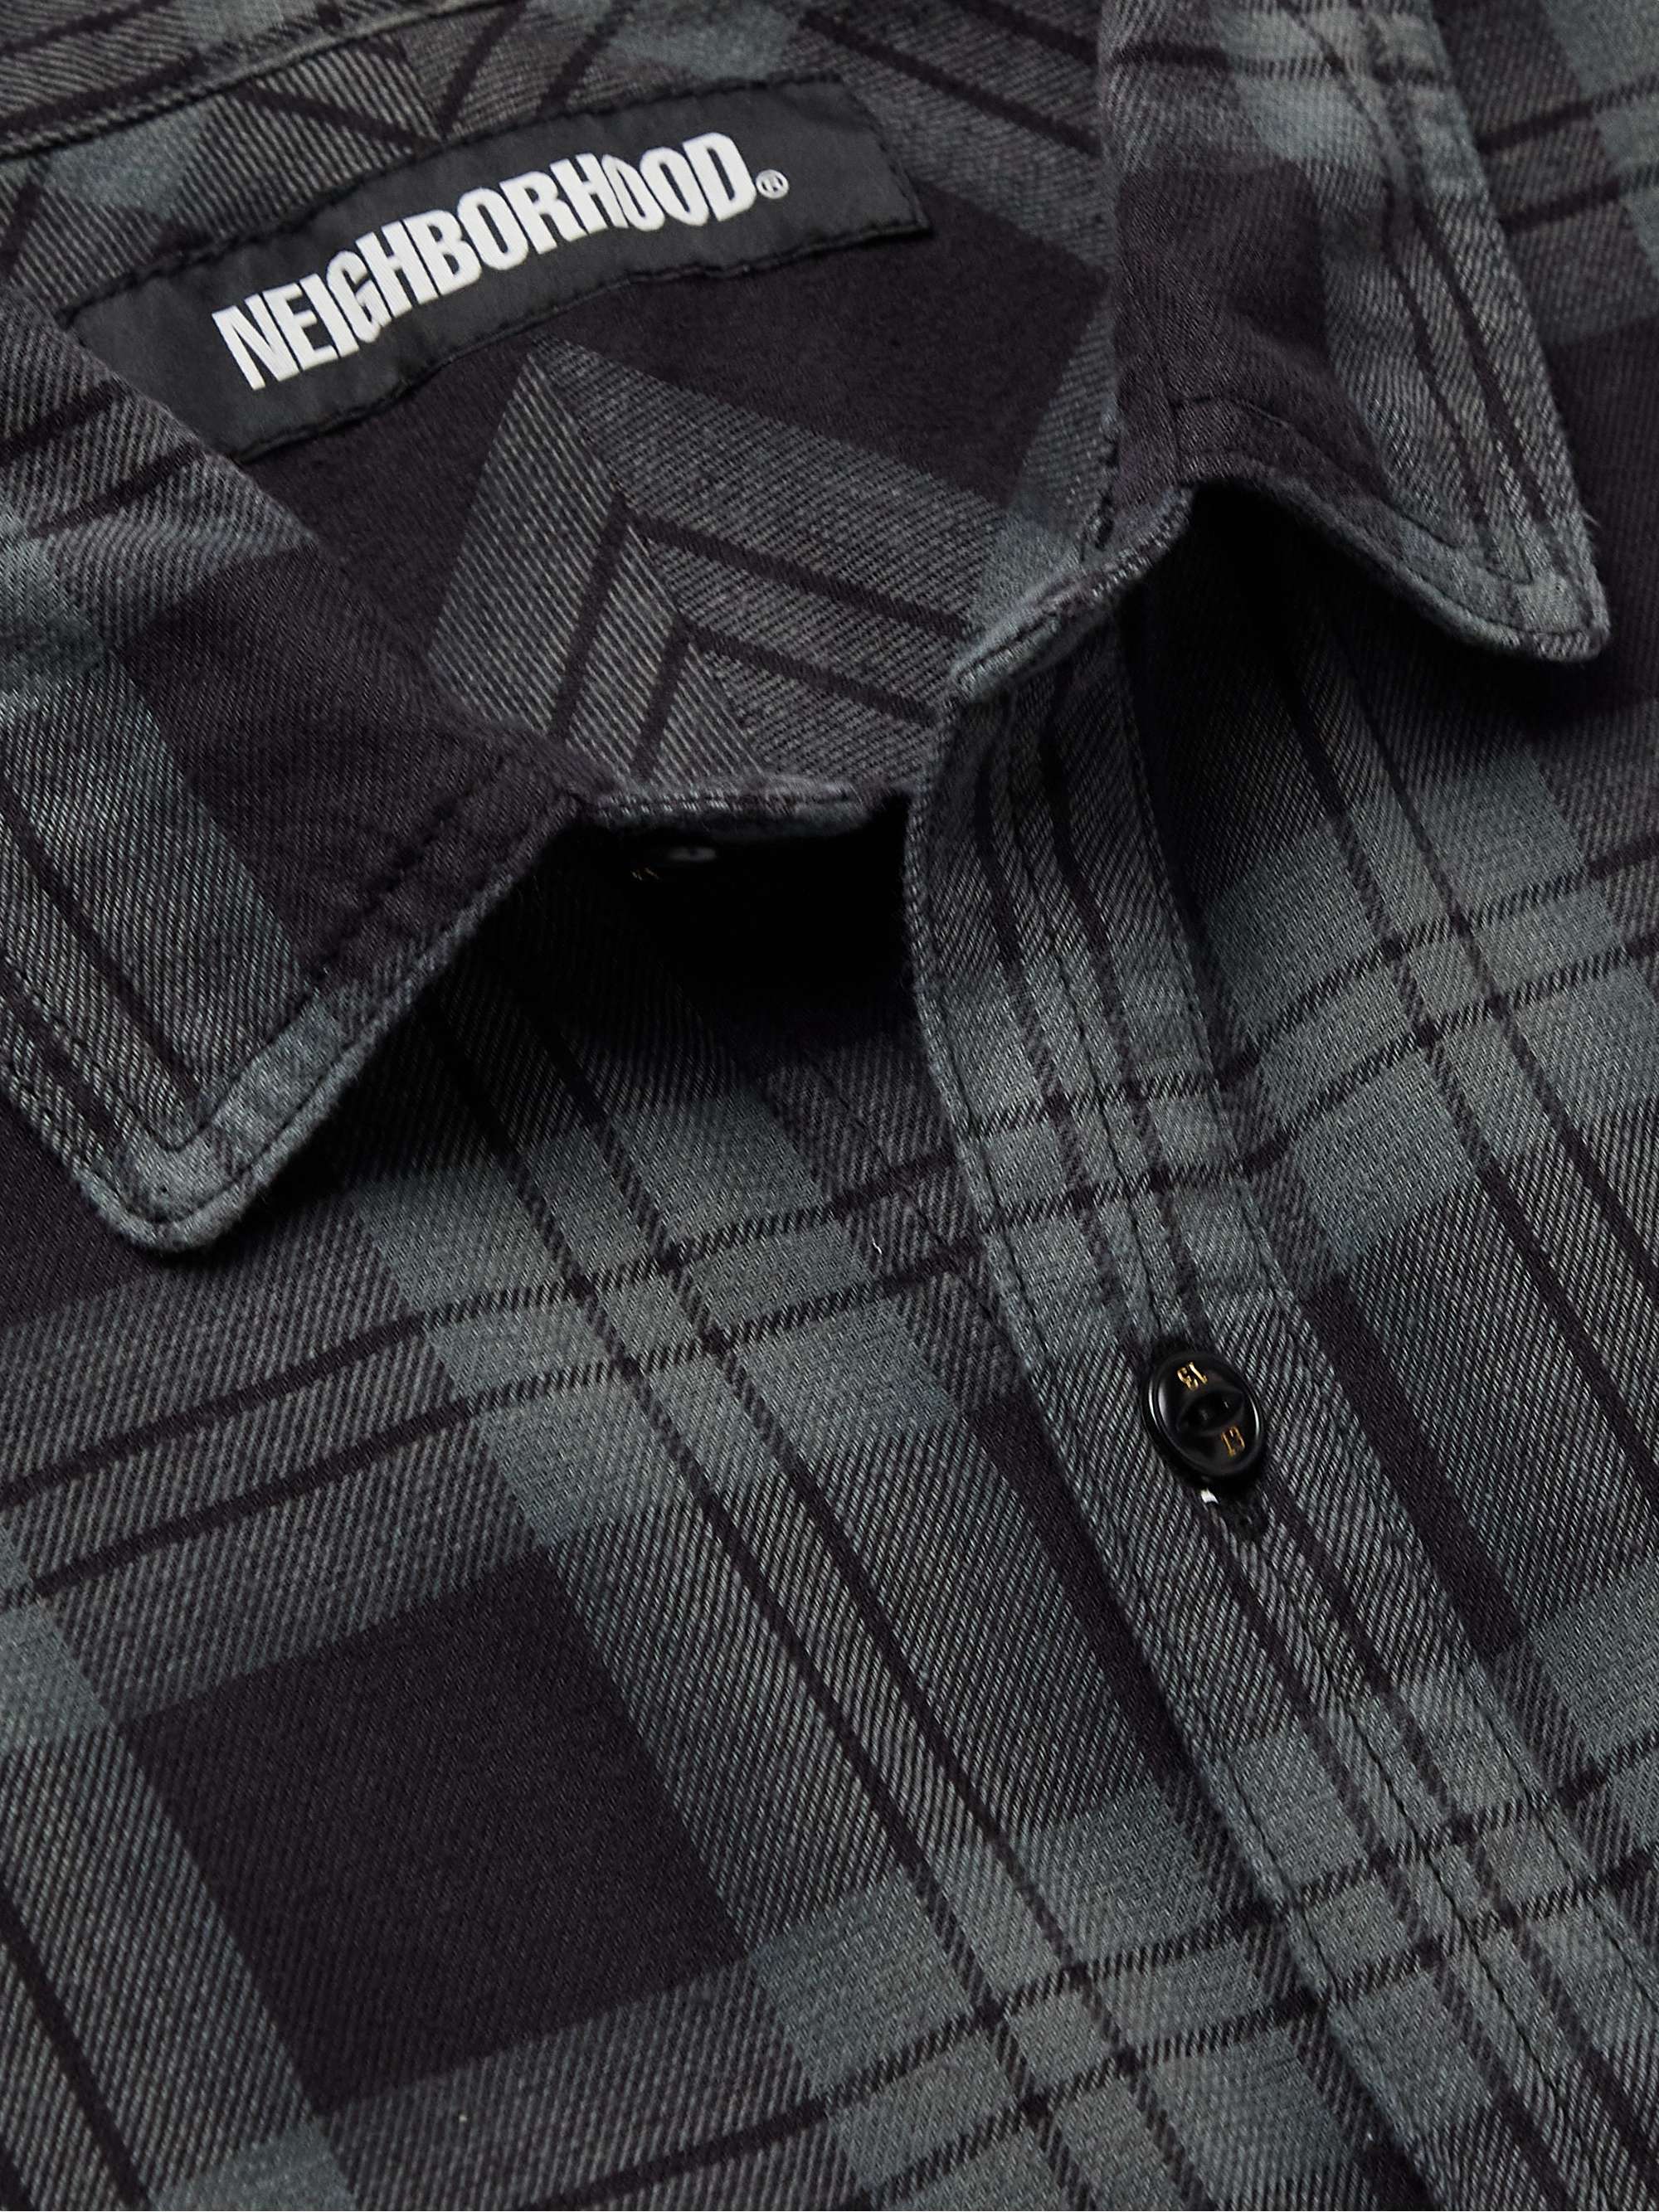 NEIGHBORHOOD Nel Checked Cotton-Flannel Shirt